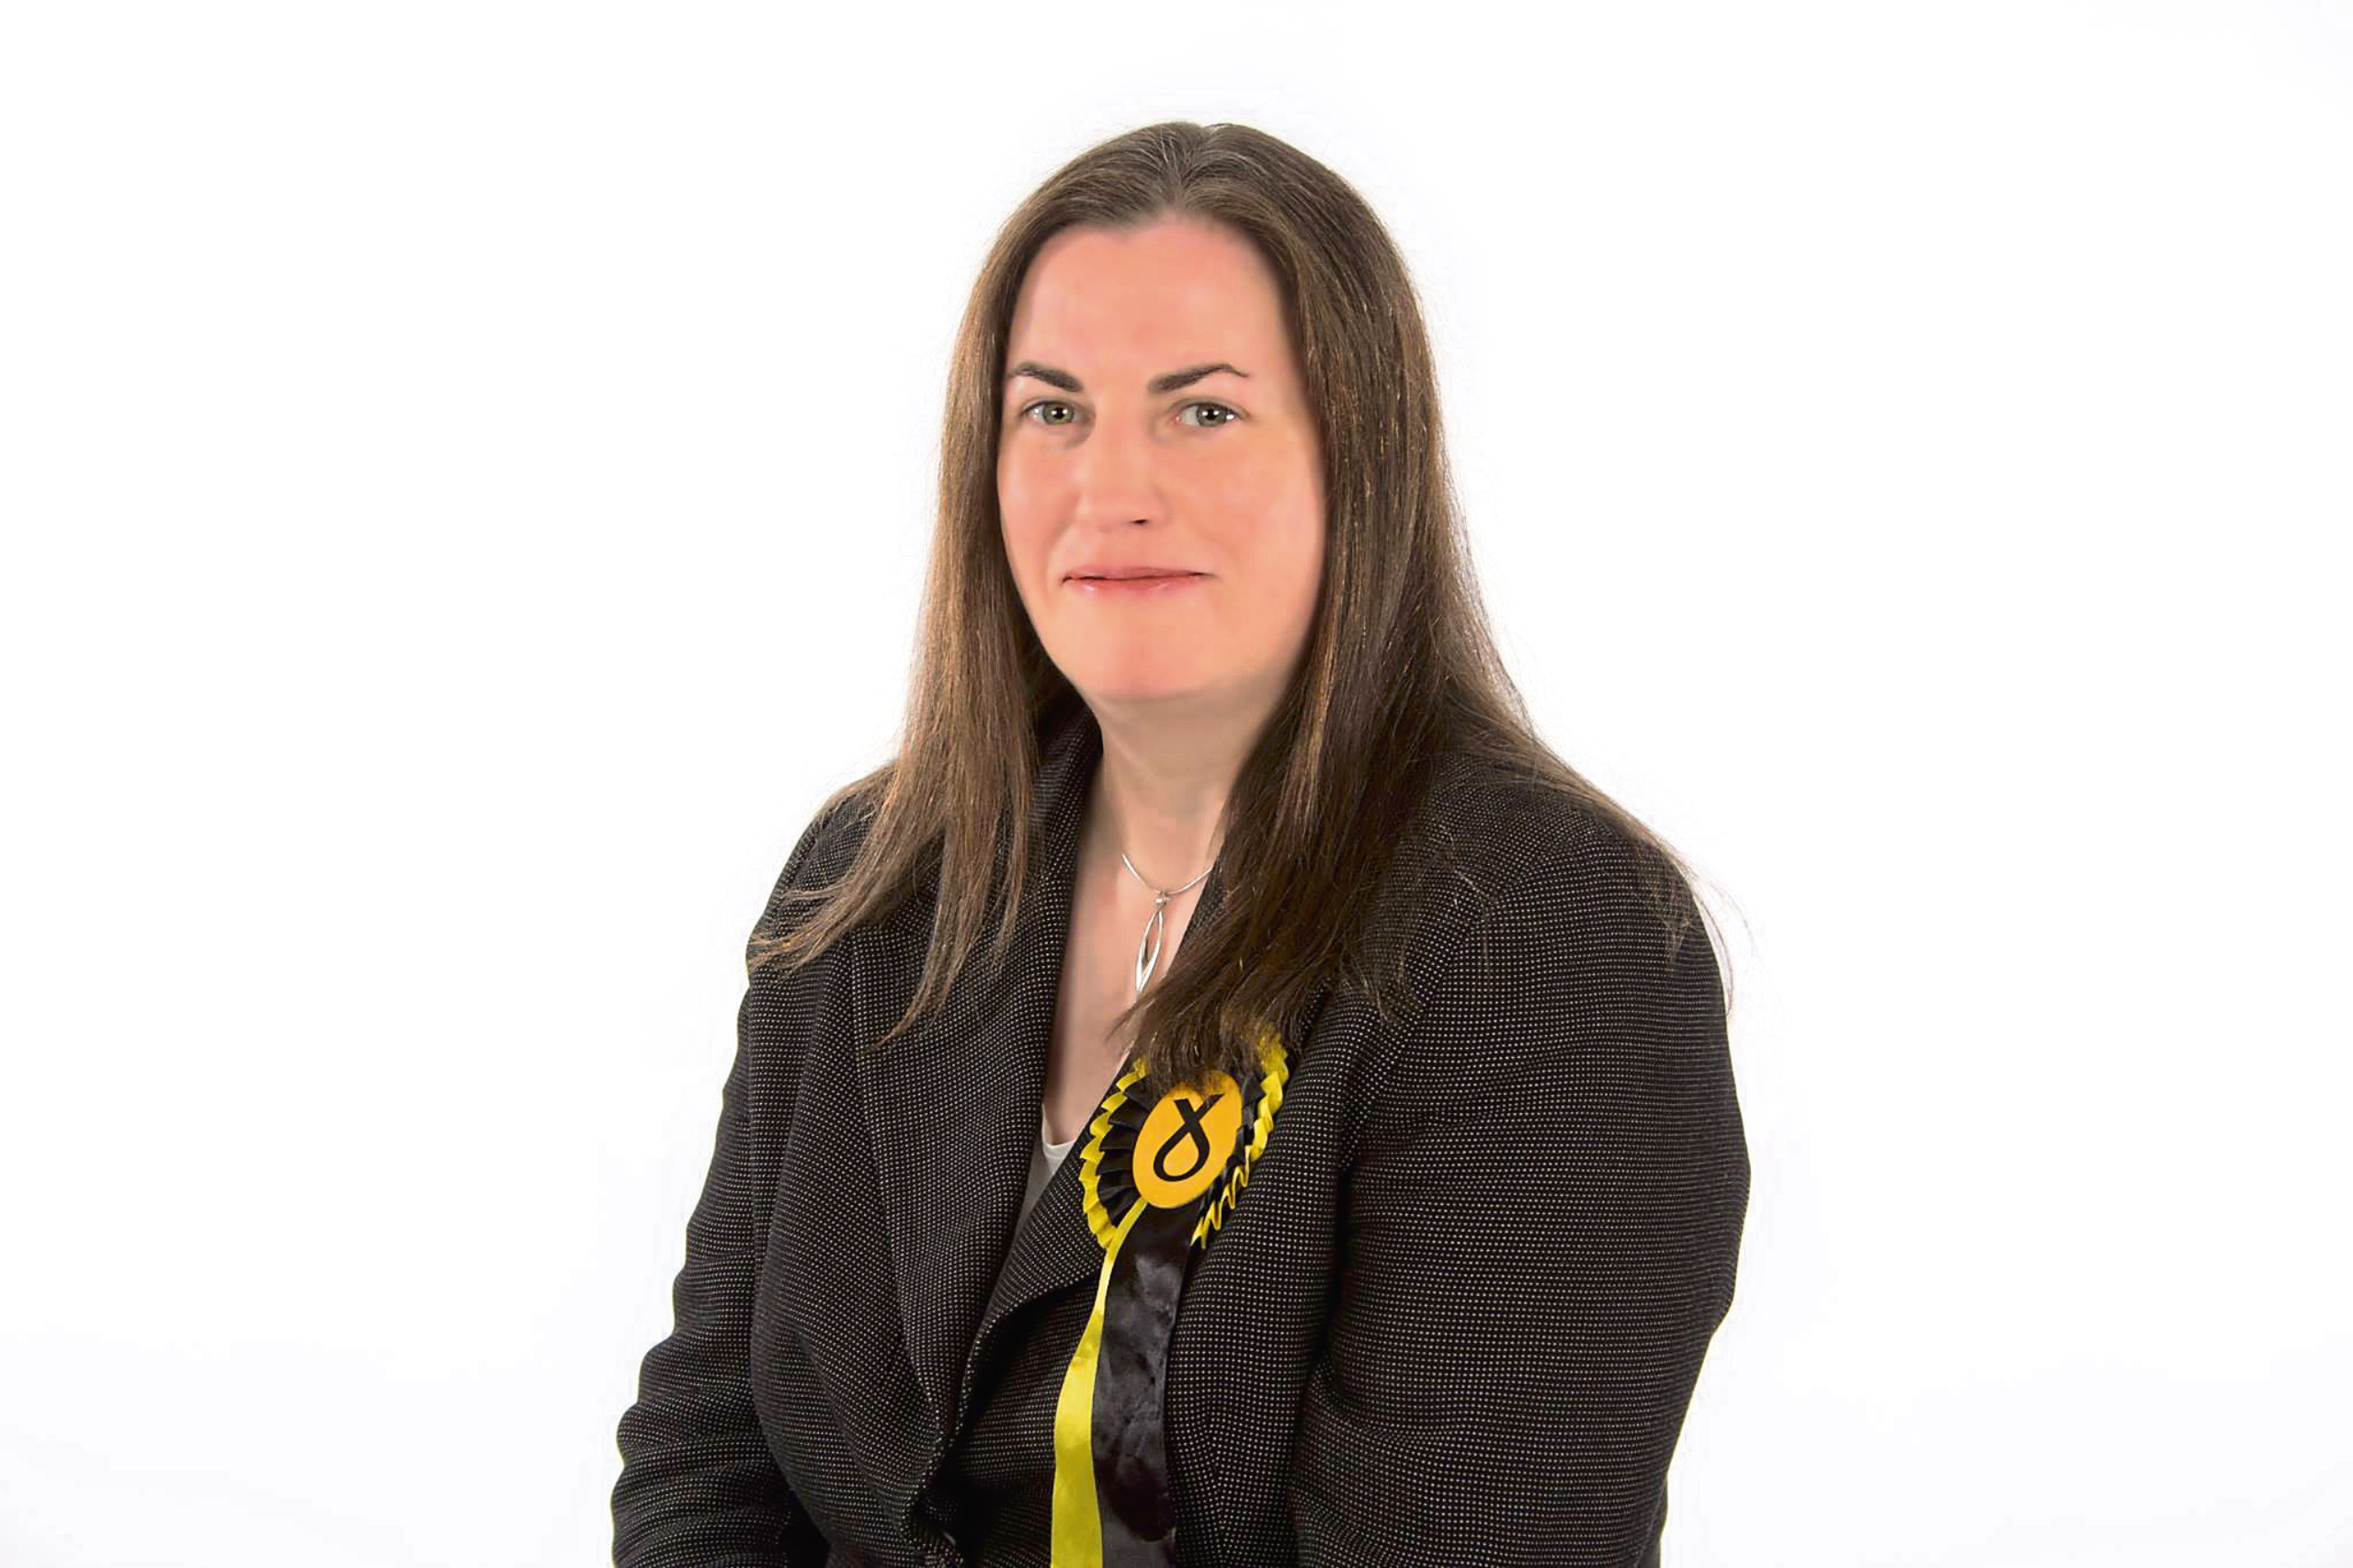 SNP councillor Julie McAnulty